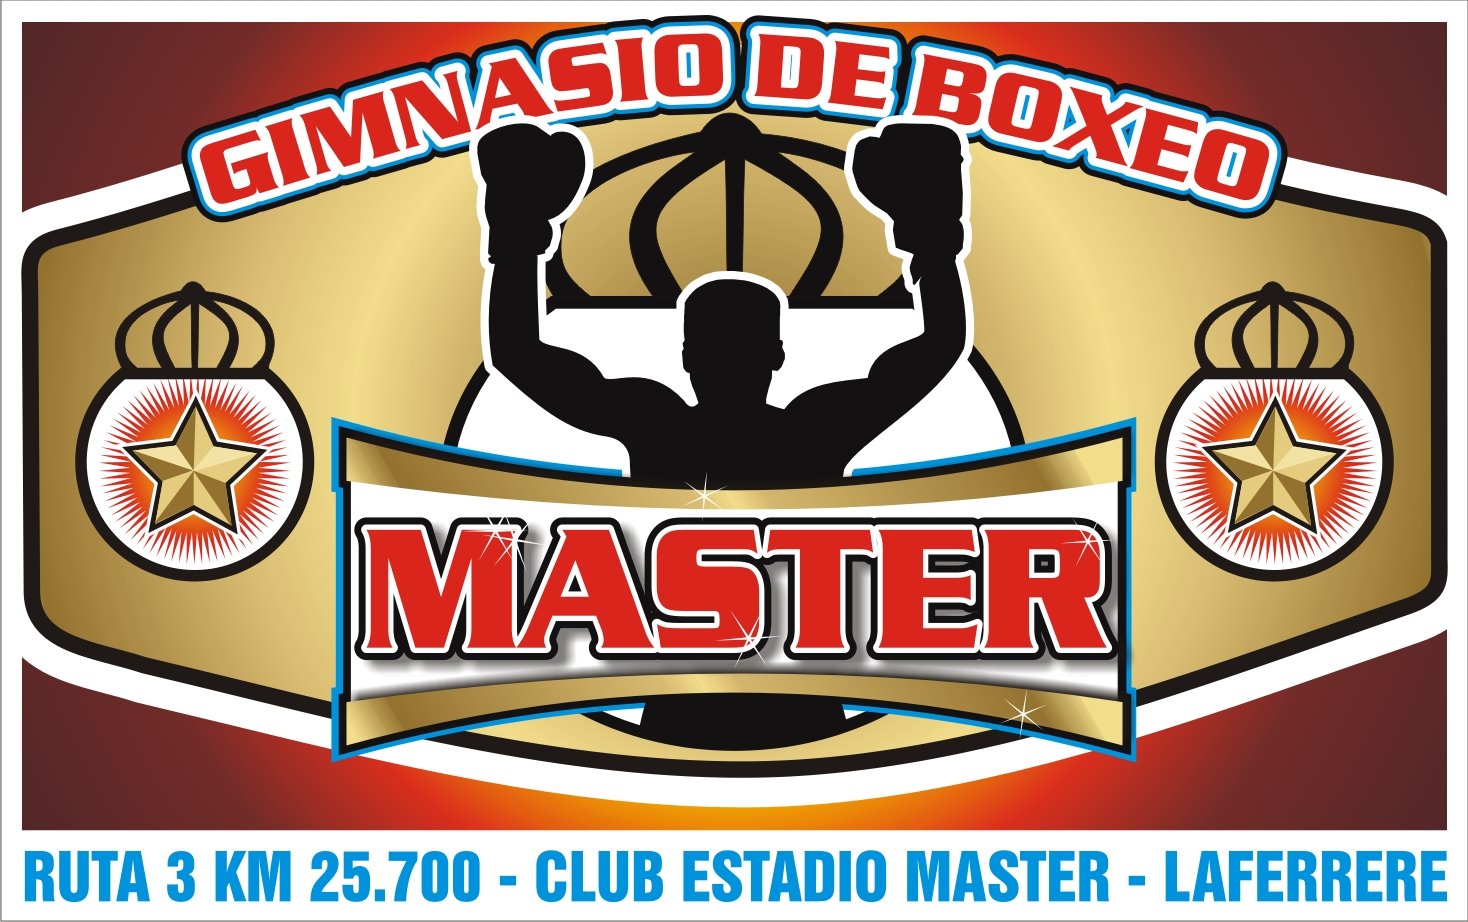 Gimnasio De Boxeo Master